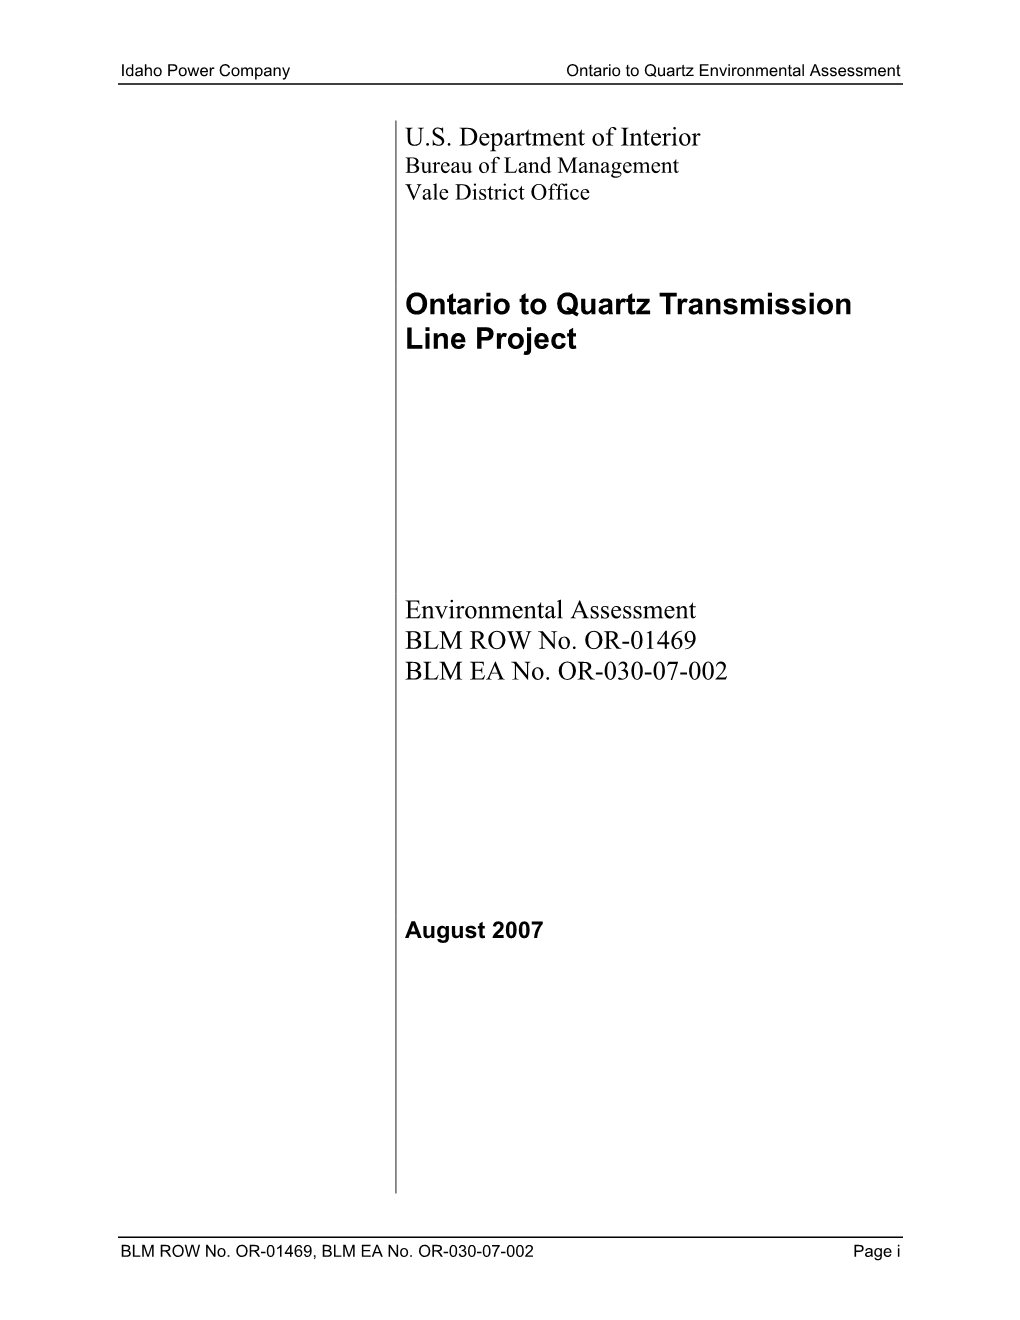 Ontario to Quartz Transmission Line Project